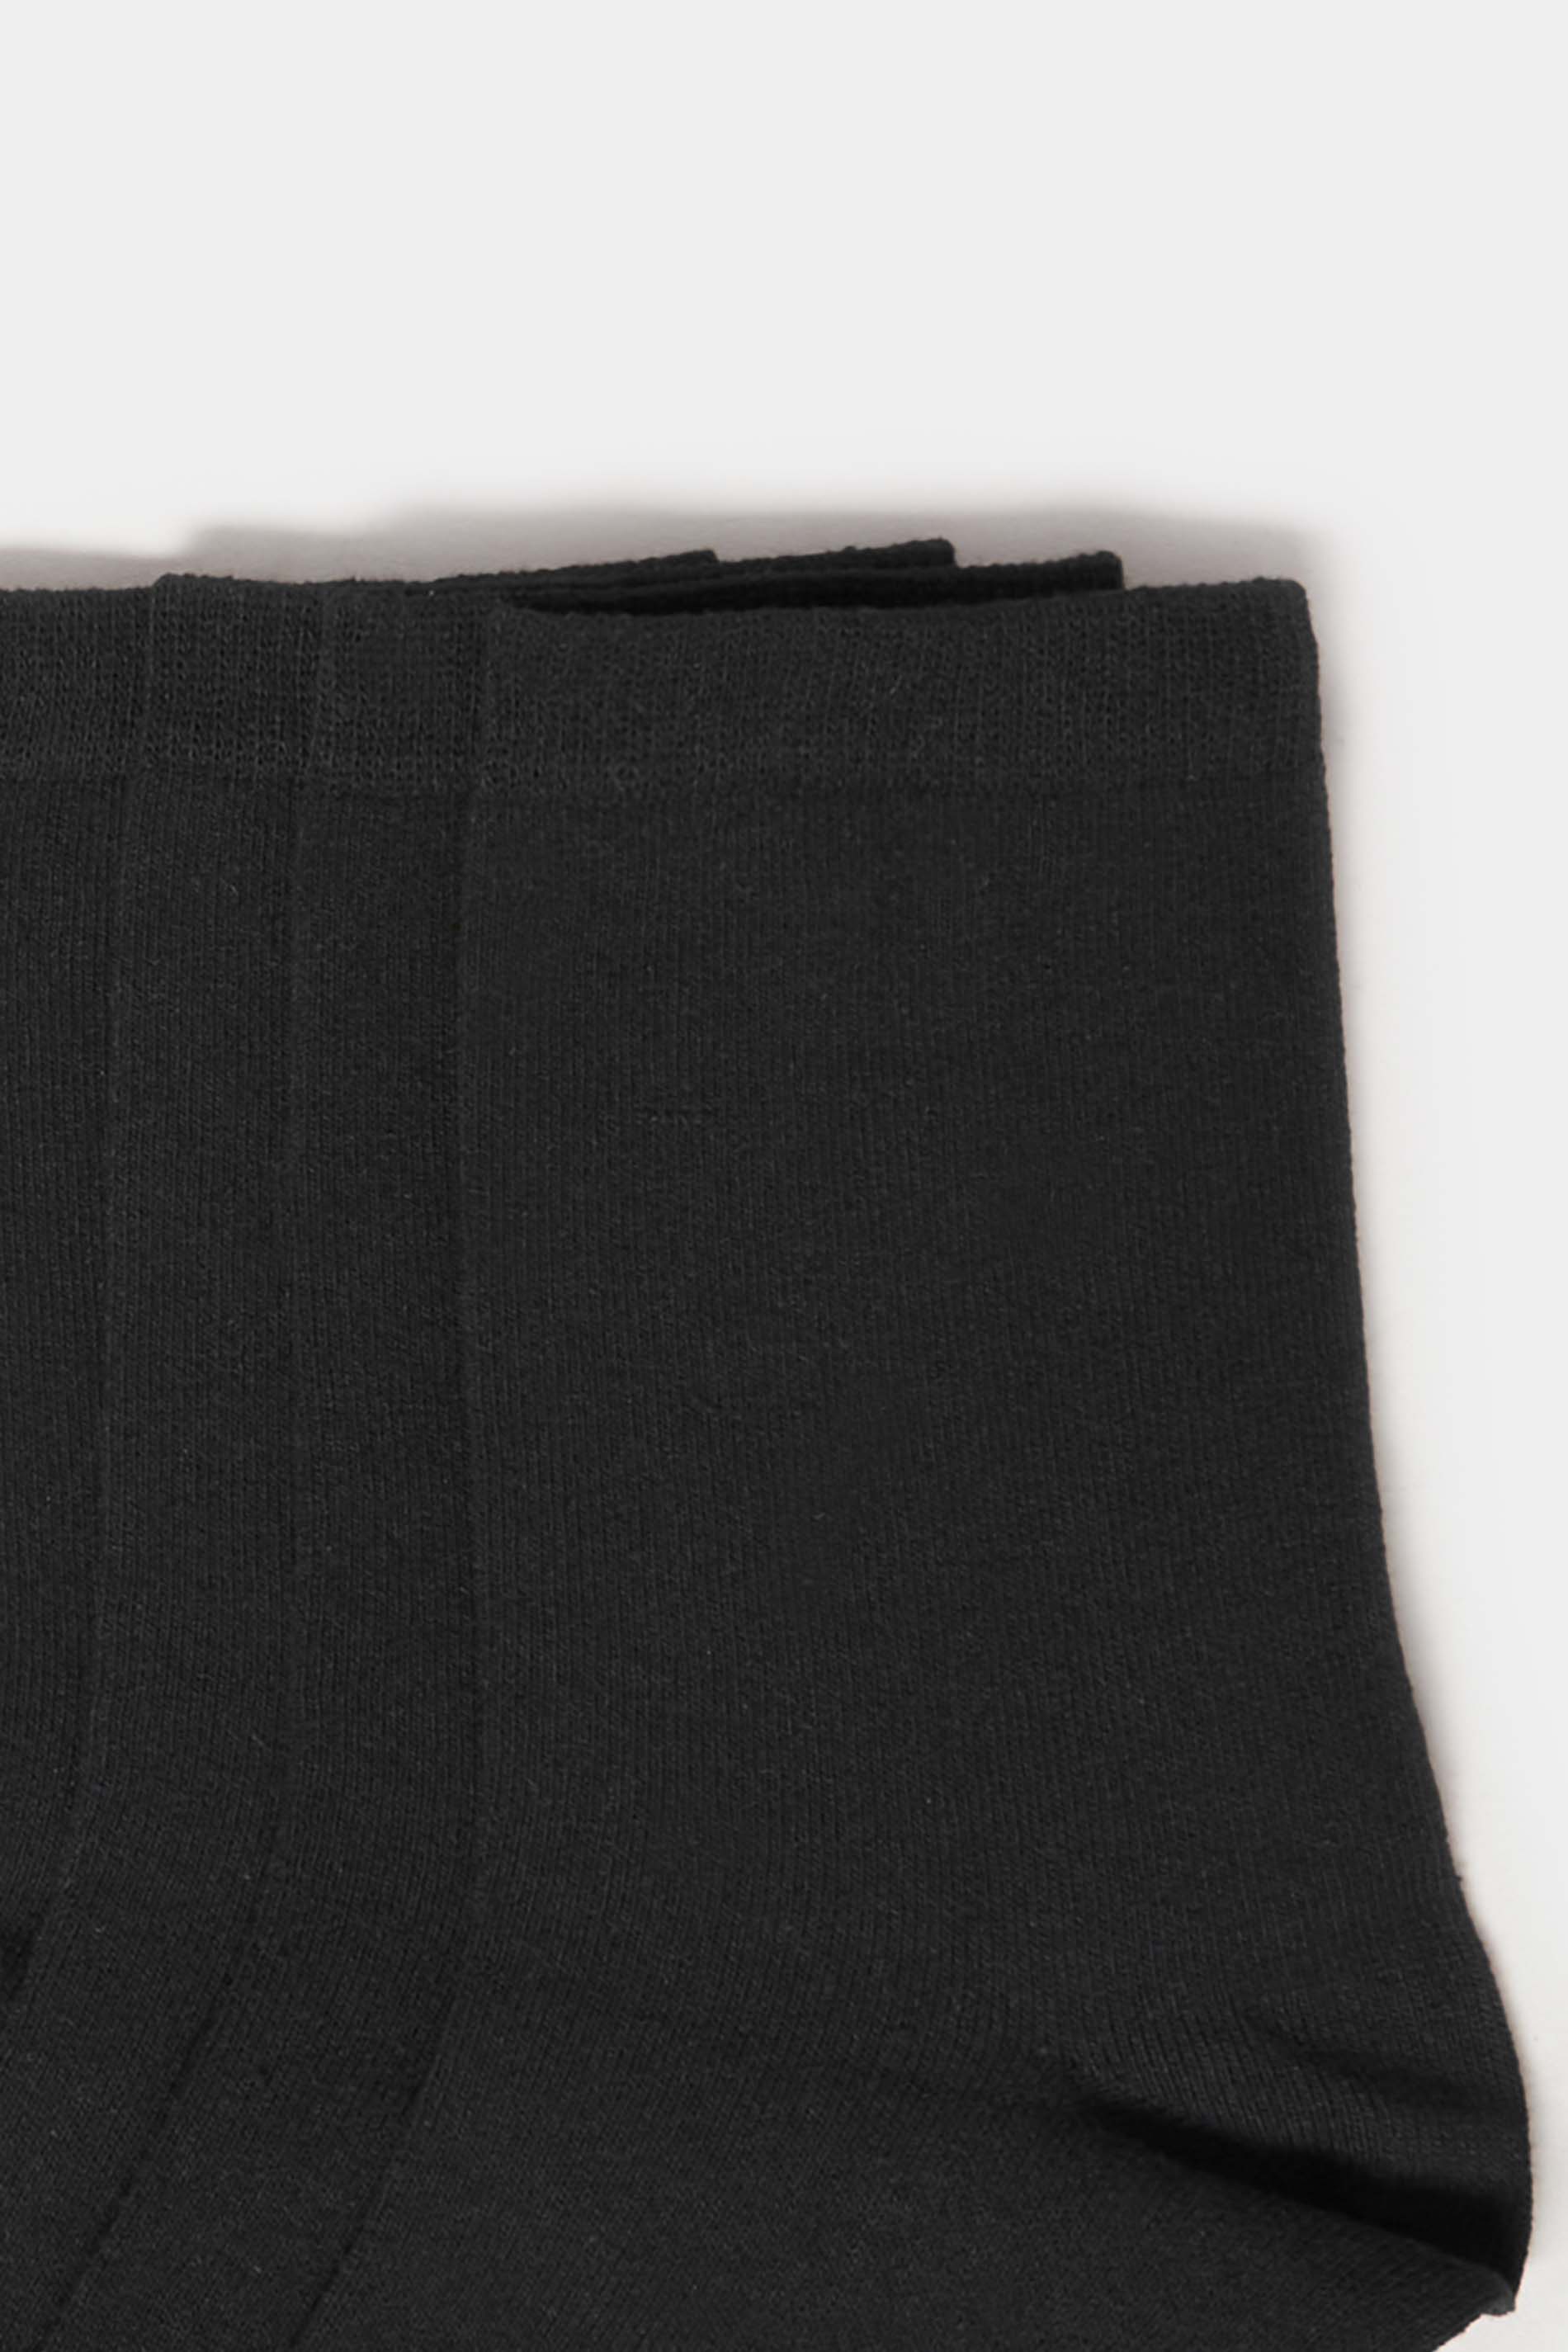 LTS 4 PACK Black Plain Ankle Socks | Long Tall Sally 3